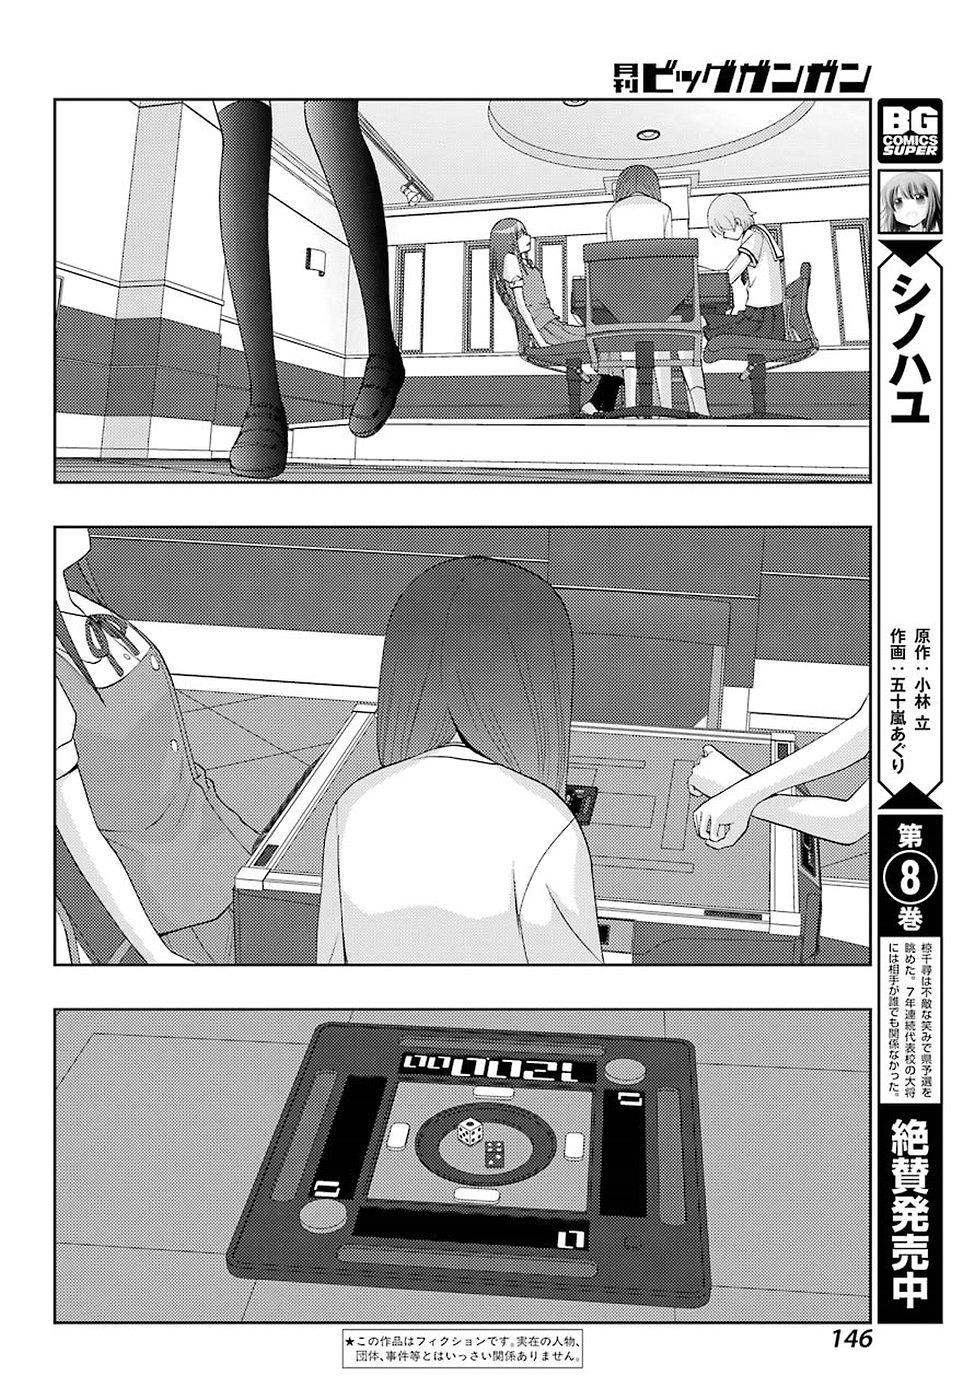 Shinohayu - The Dawn of Age Manga - Chapter 053 - Page 2